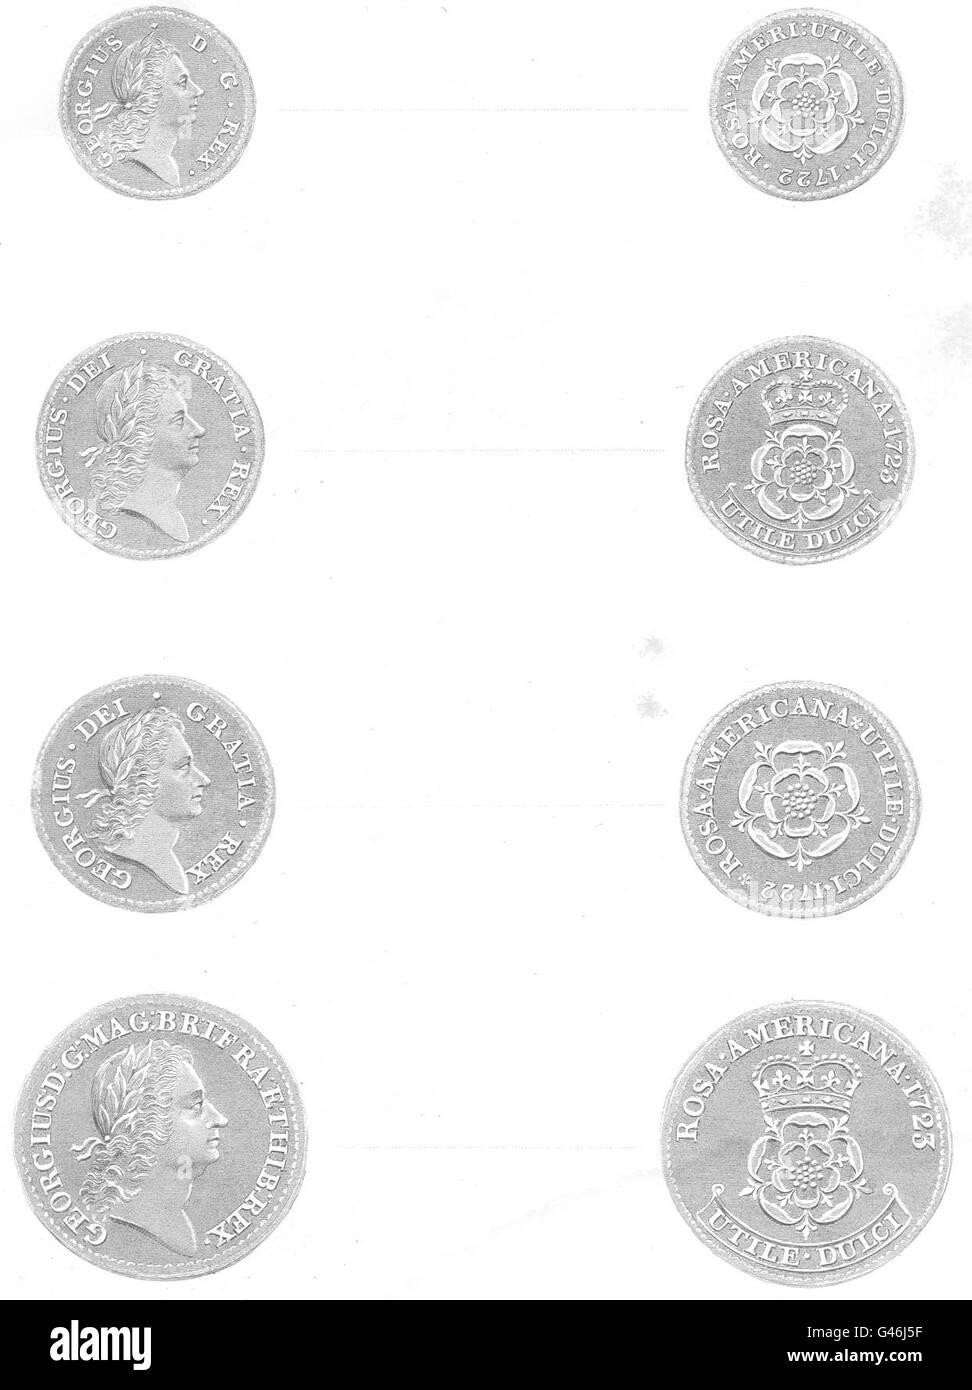 ROSA AMERICANA COINS:Georgius Rex.Utile Dulci.1722-23 DG.Mag Br Fra Hib., 1850 Stock Photo